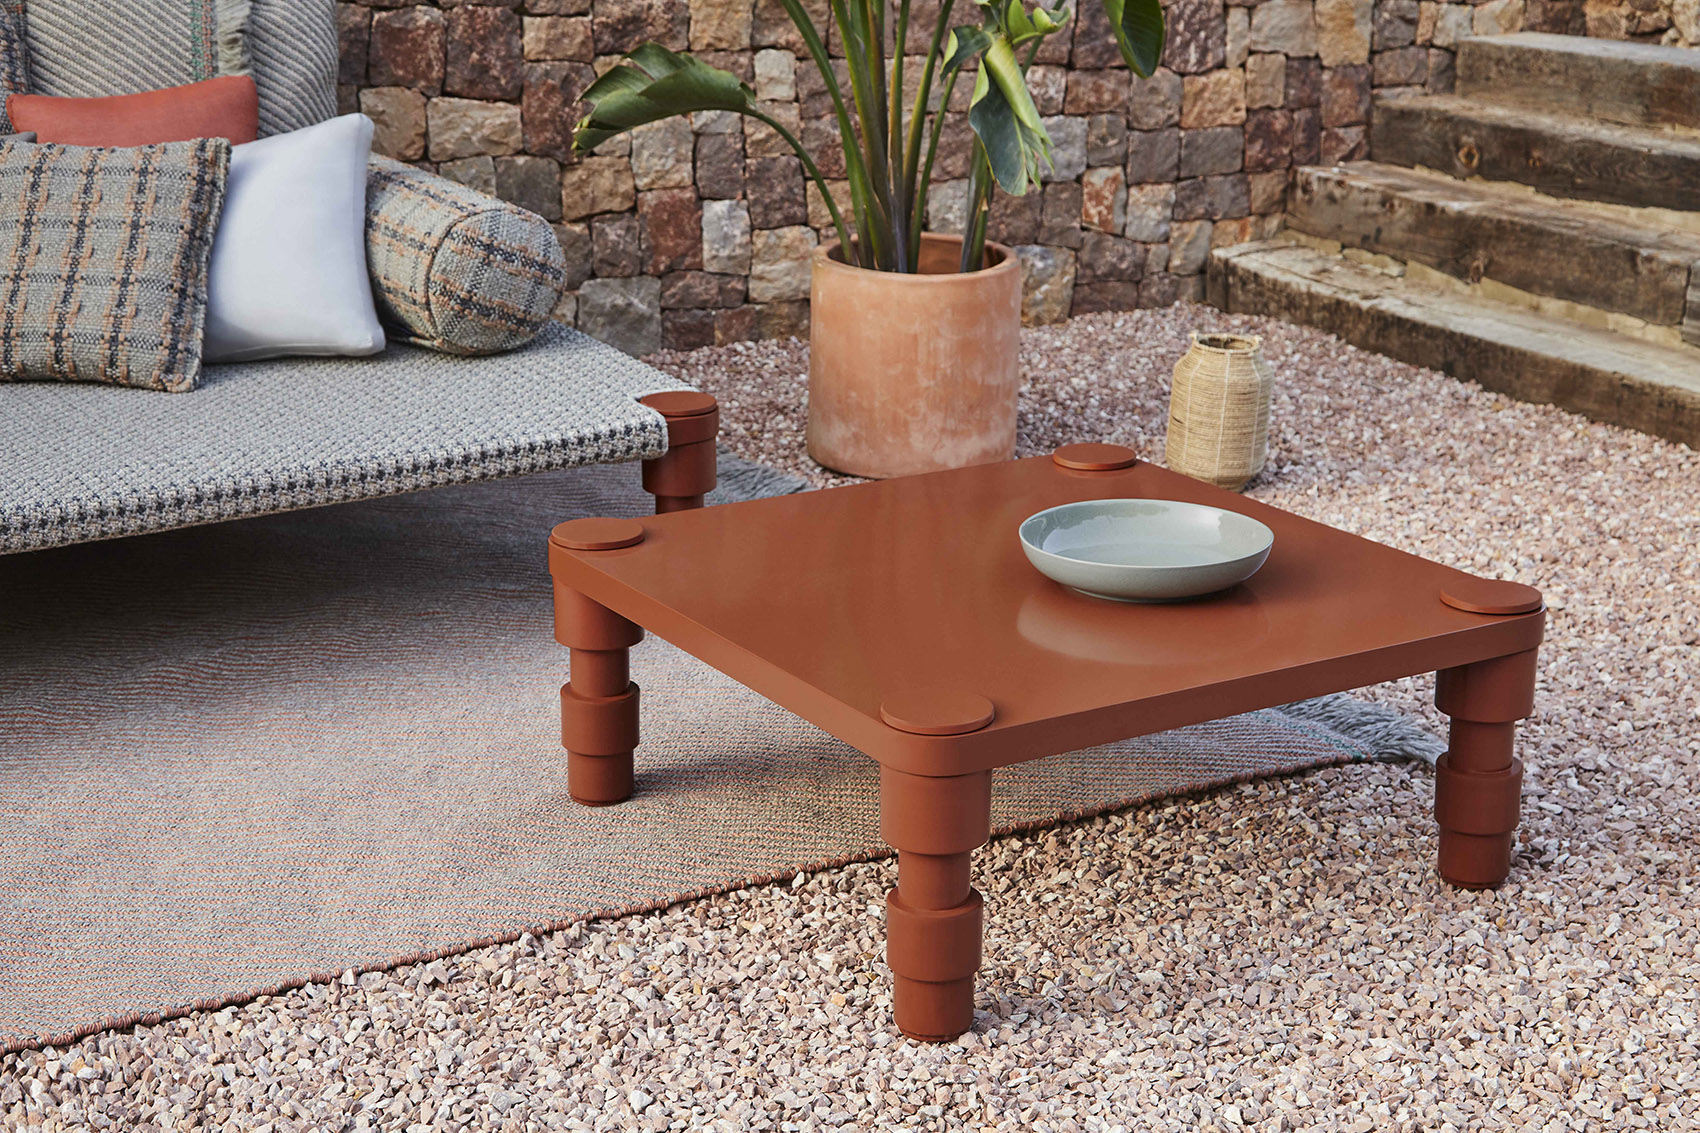 Garden Layers印度床与边桌系列/灵感源于莫卧儿帝国的古老习俗-124